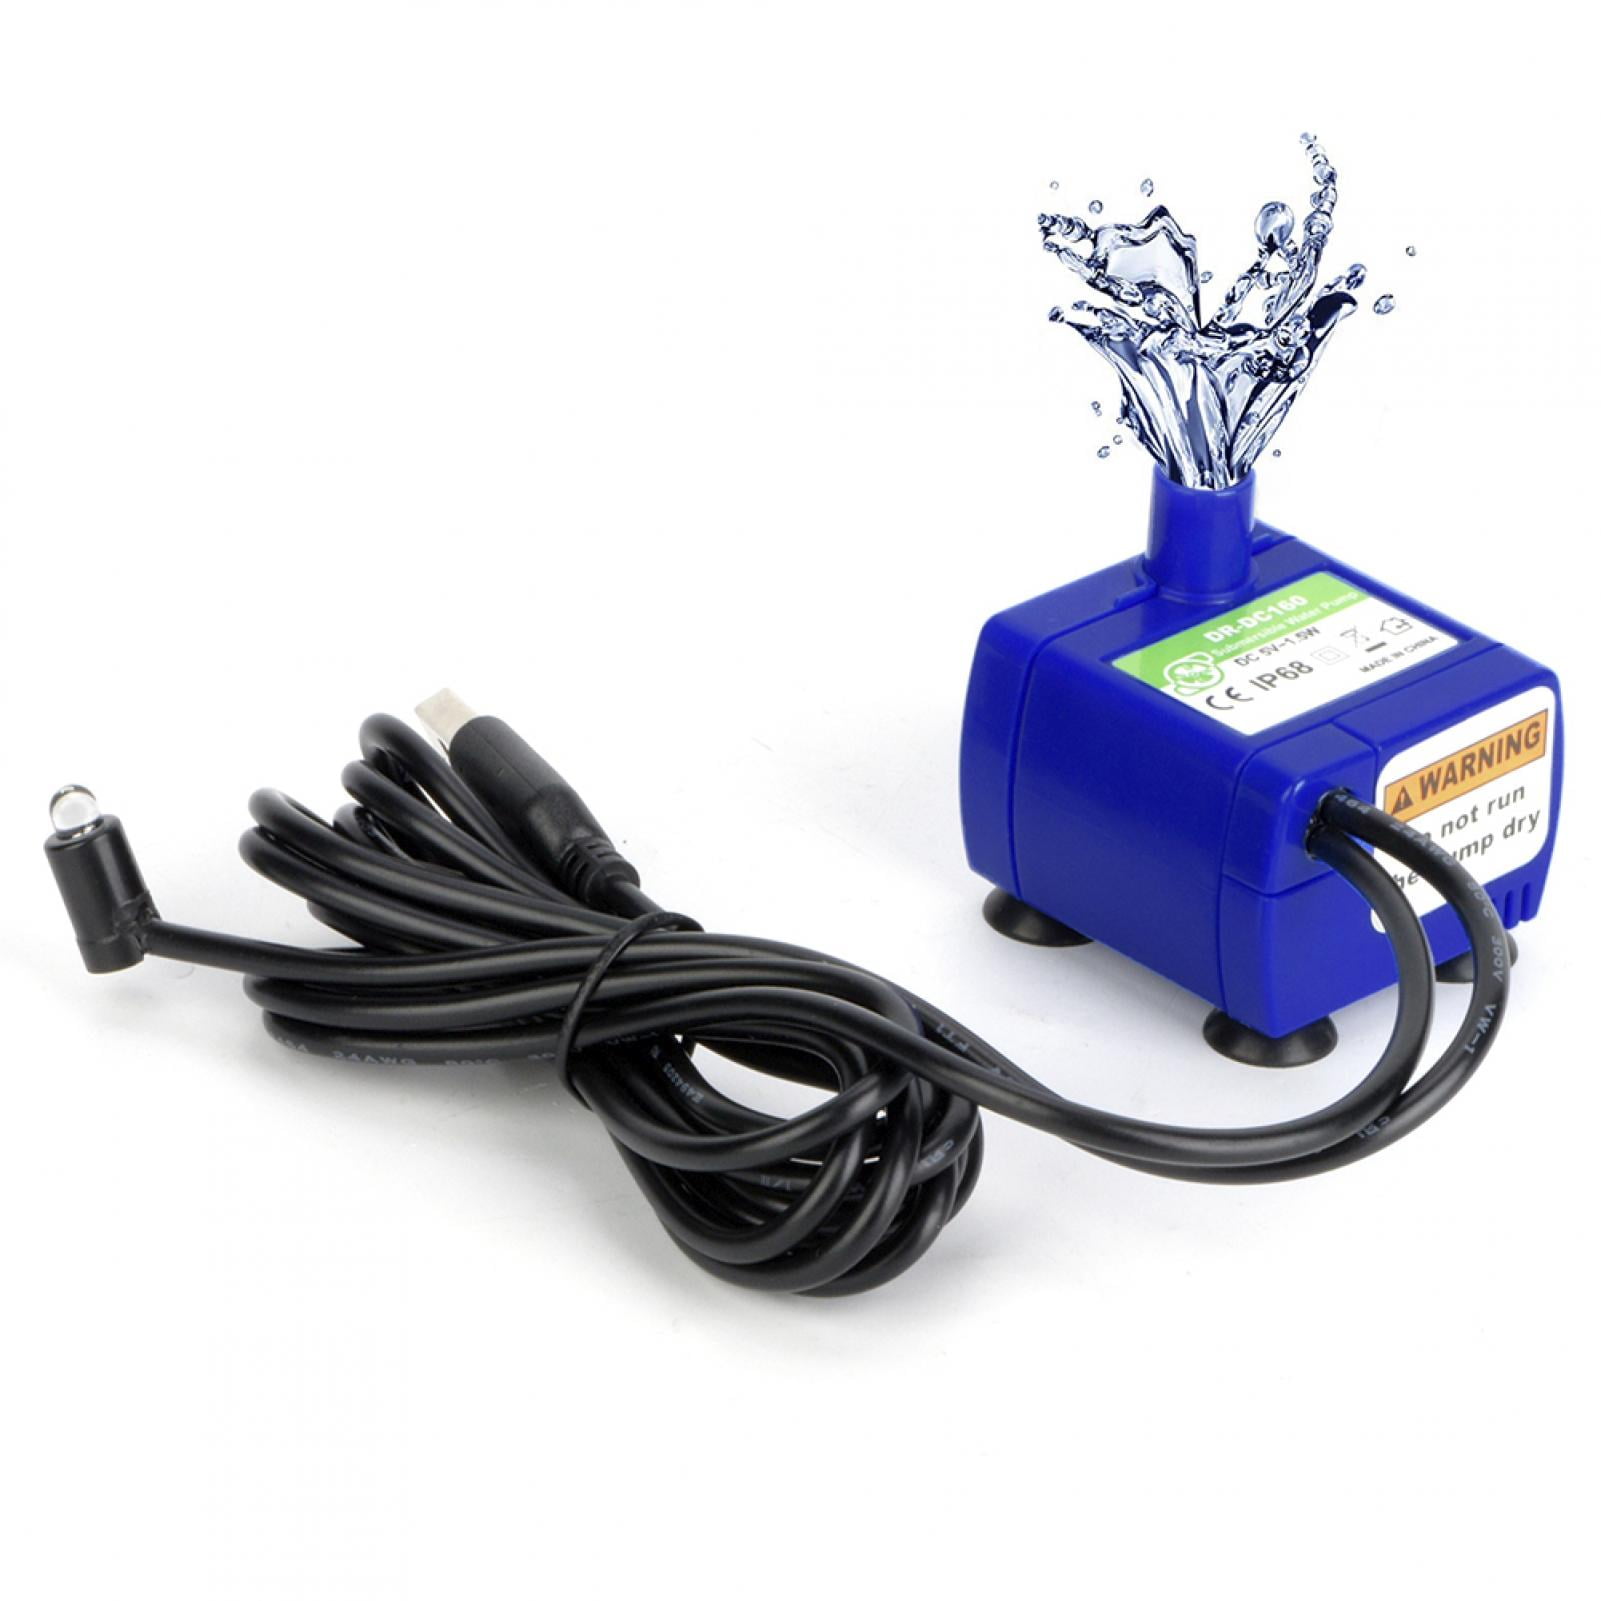 9V 3W USB Brushless Submersible Water Pump Aquarium Fountain Pond Pump Black UEETEK USB-1020 DC 3.5V 